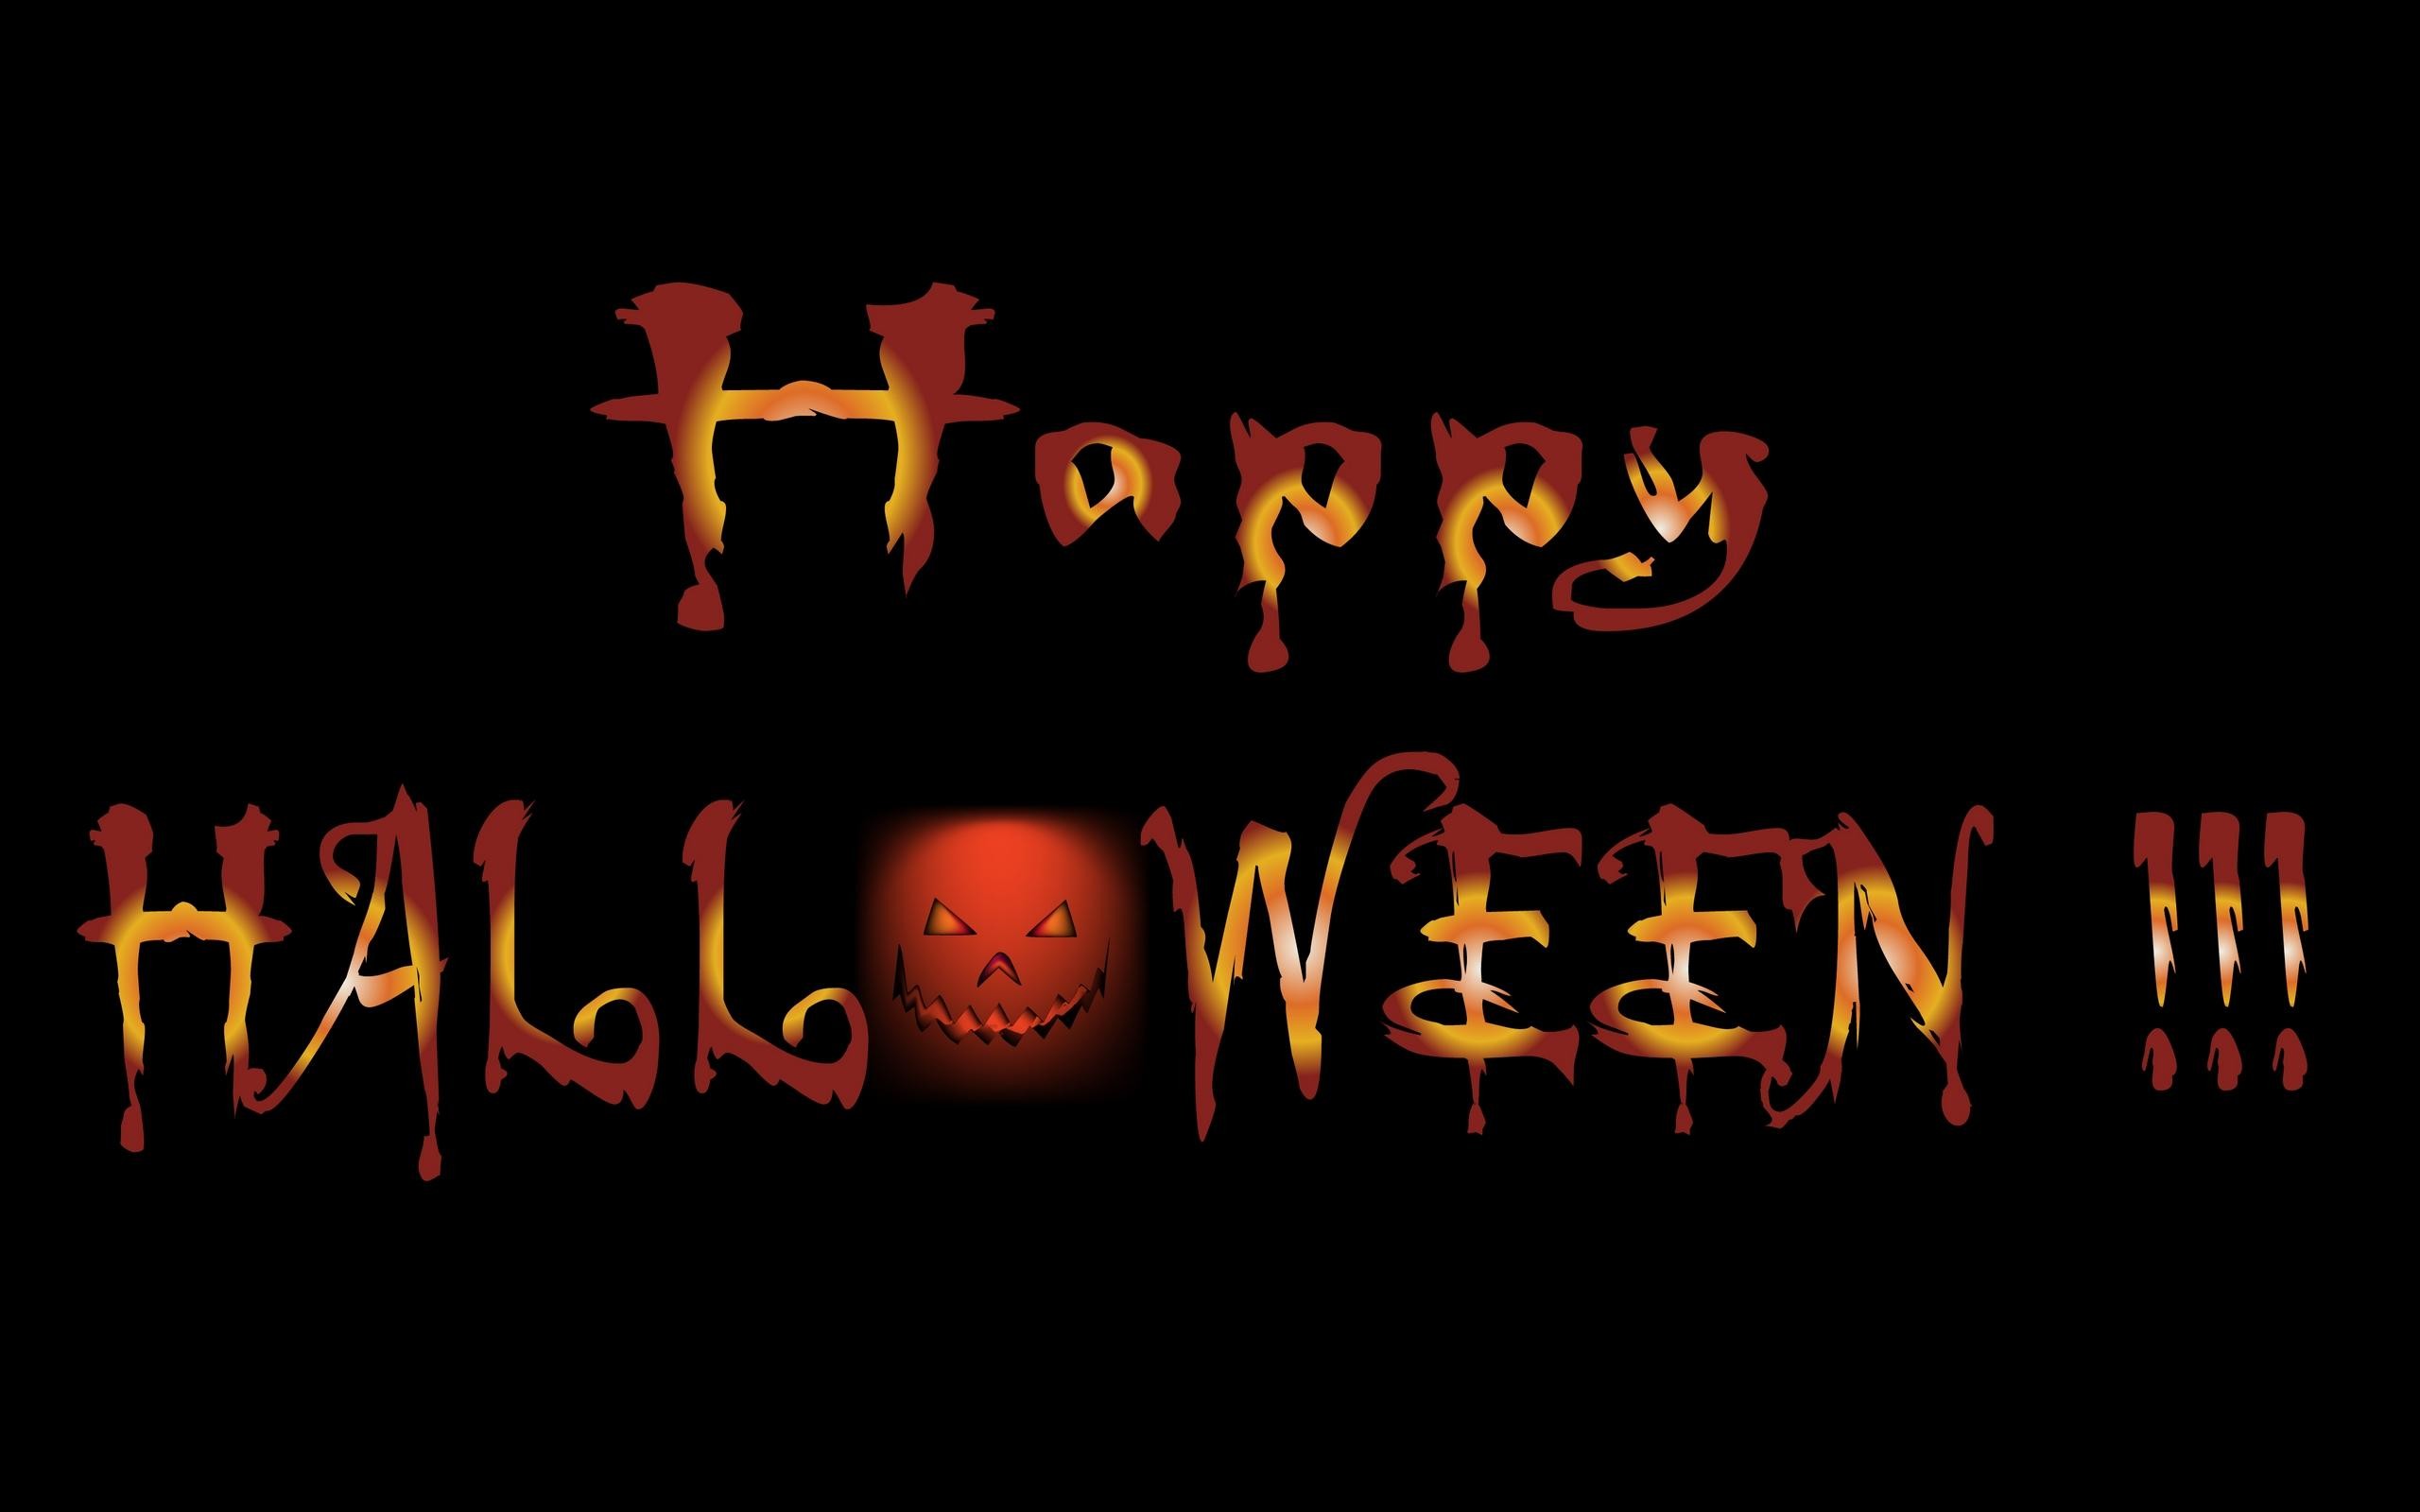 Happy Halloween Wallpapers For Desktop Wallpaper 2560 x 1600 px 1.2 MB graveyard skull iphone cute